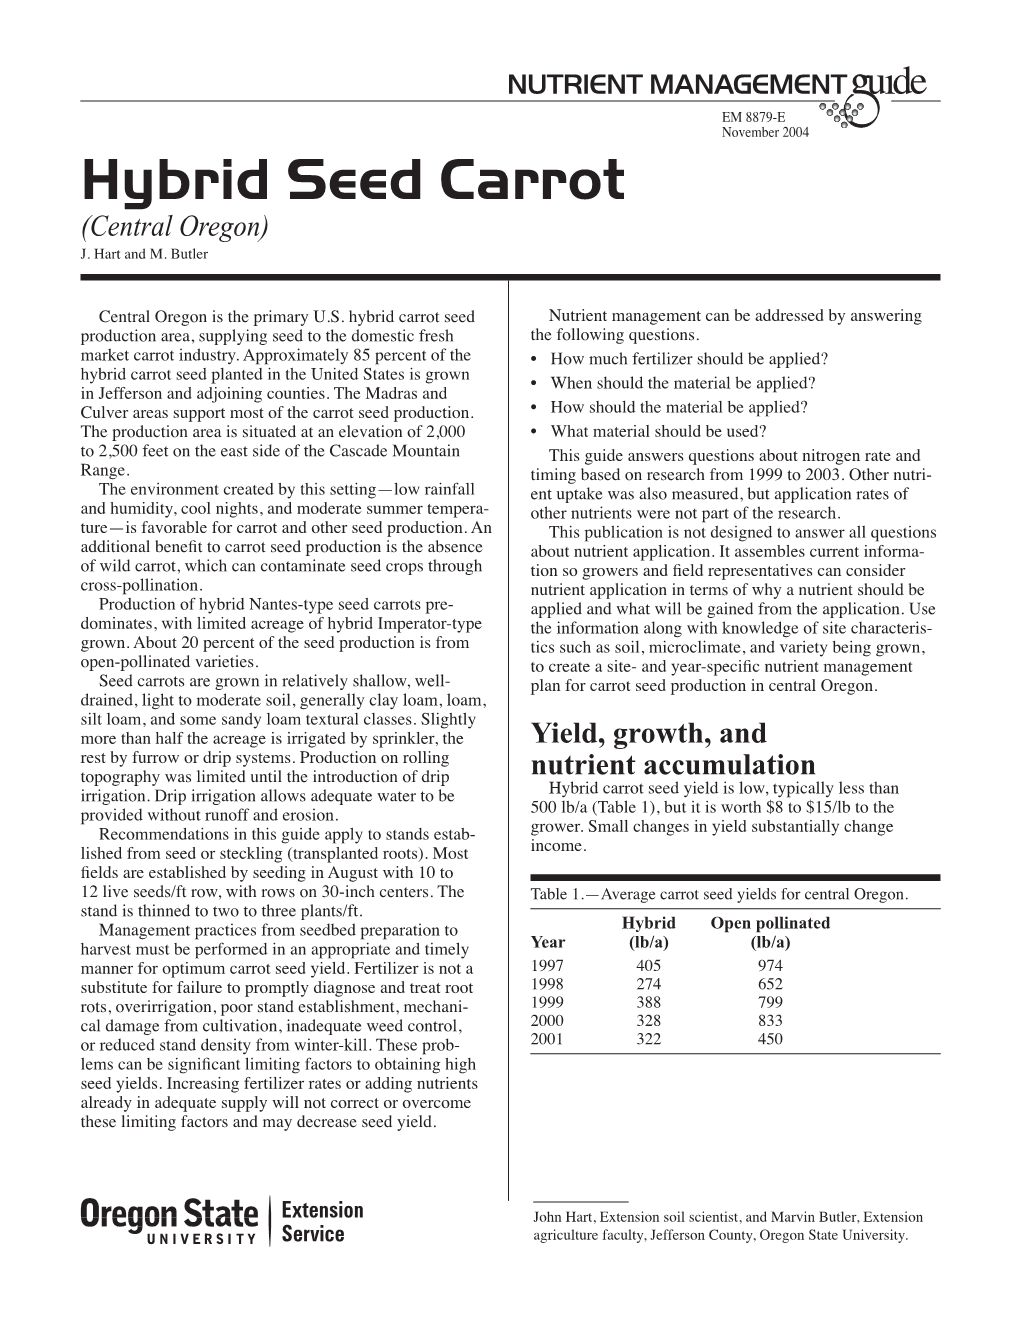 Hybrid Seed Carrot (Central Oregon) J